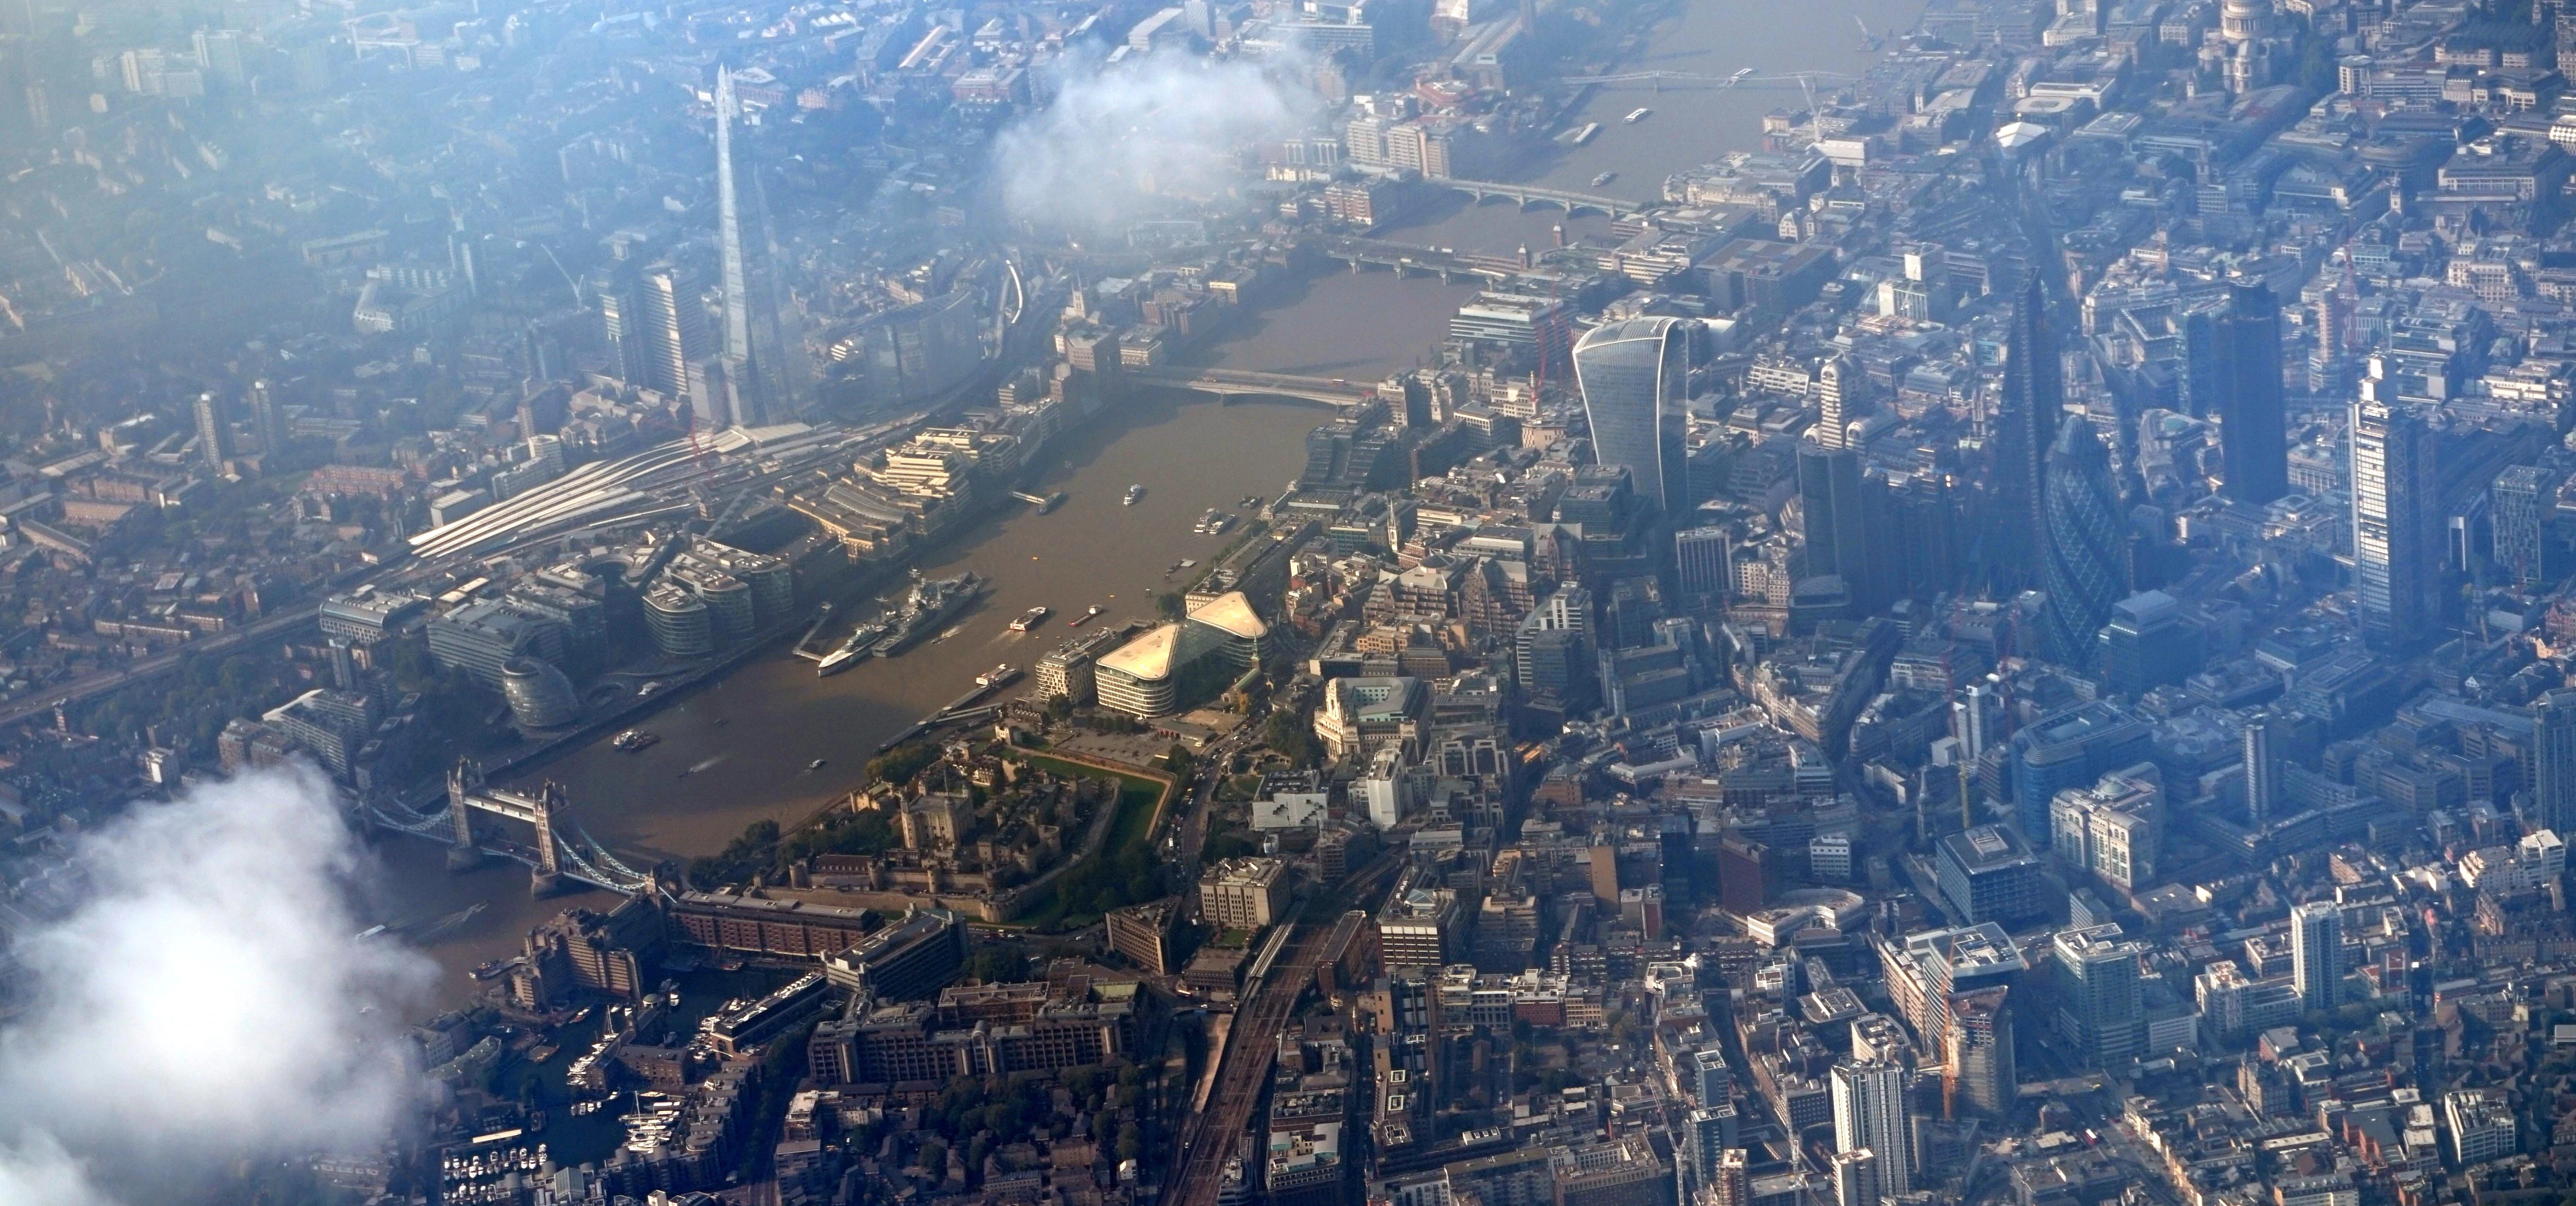 London from above - City, Shard, Tower Bridge